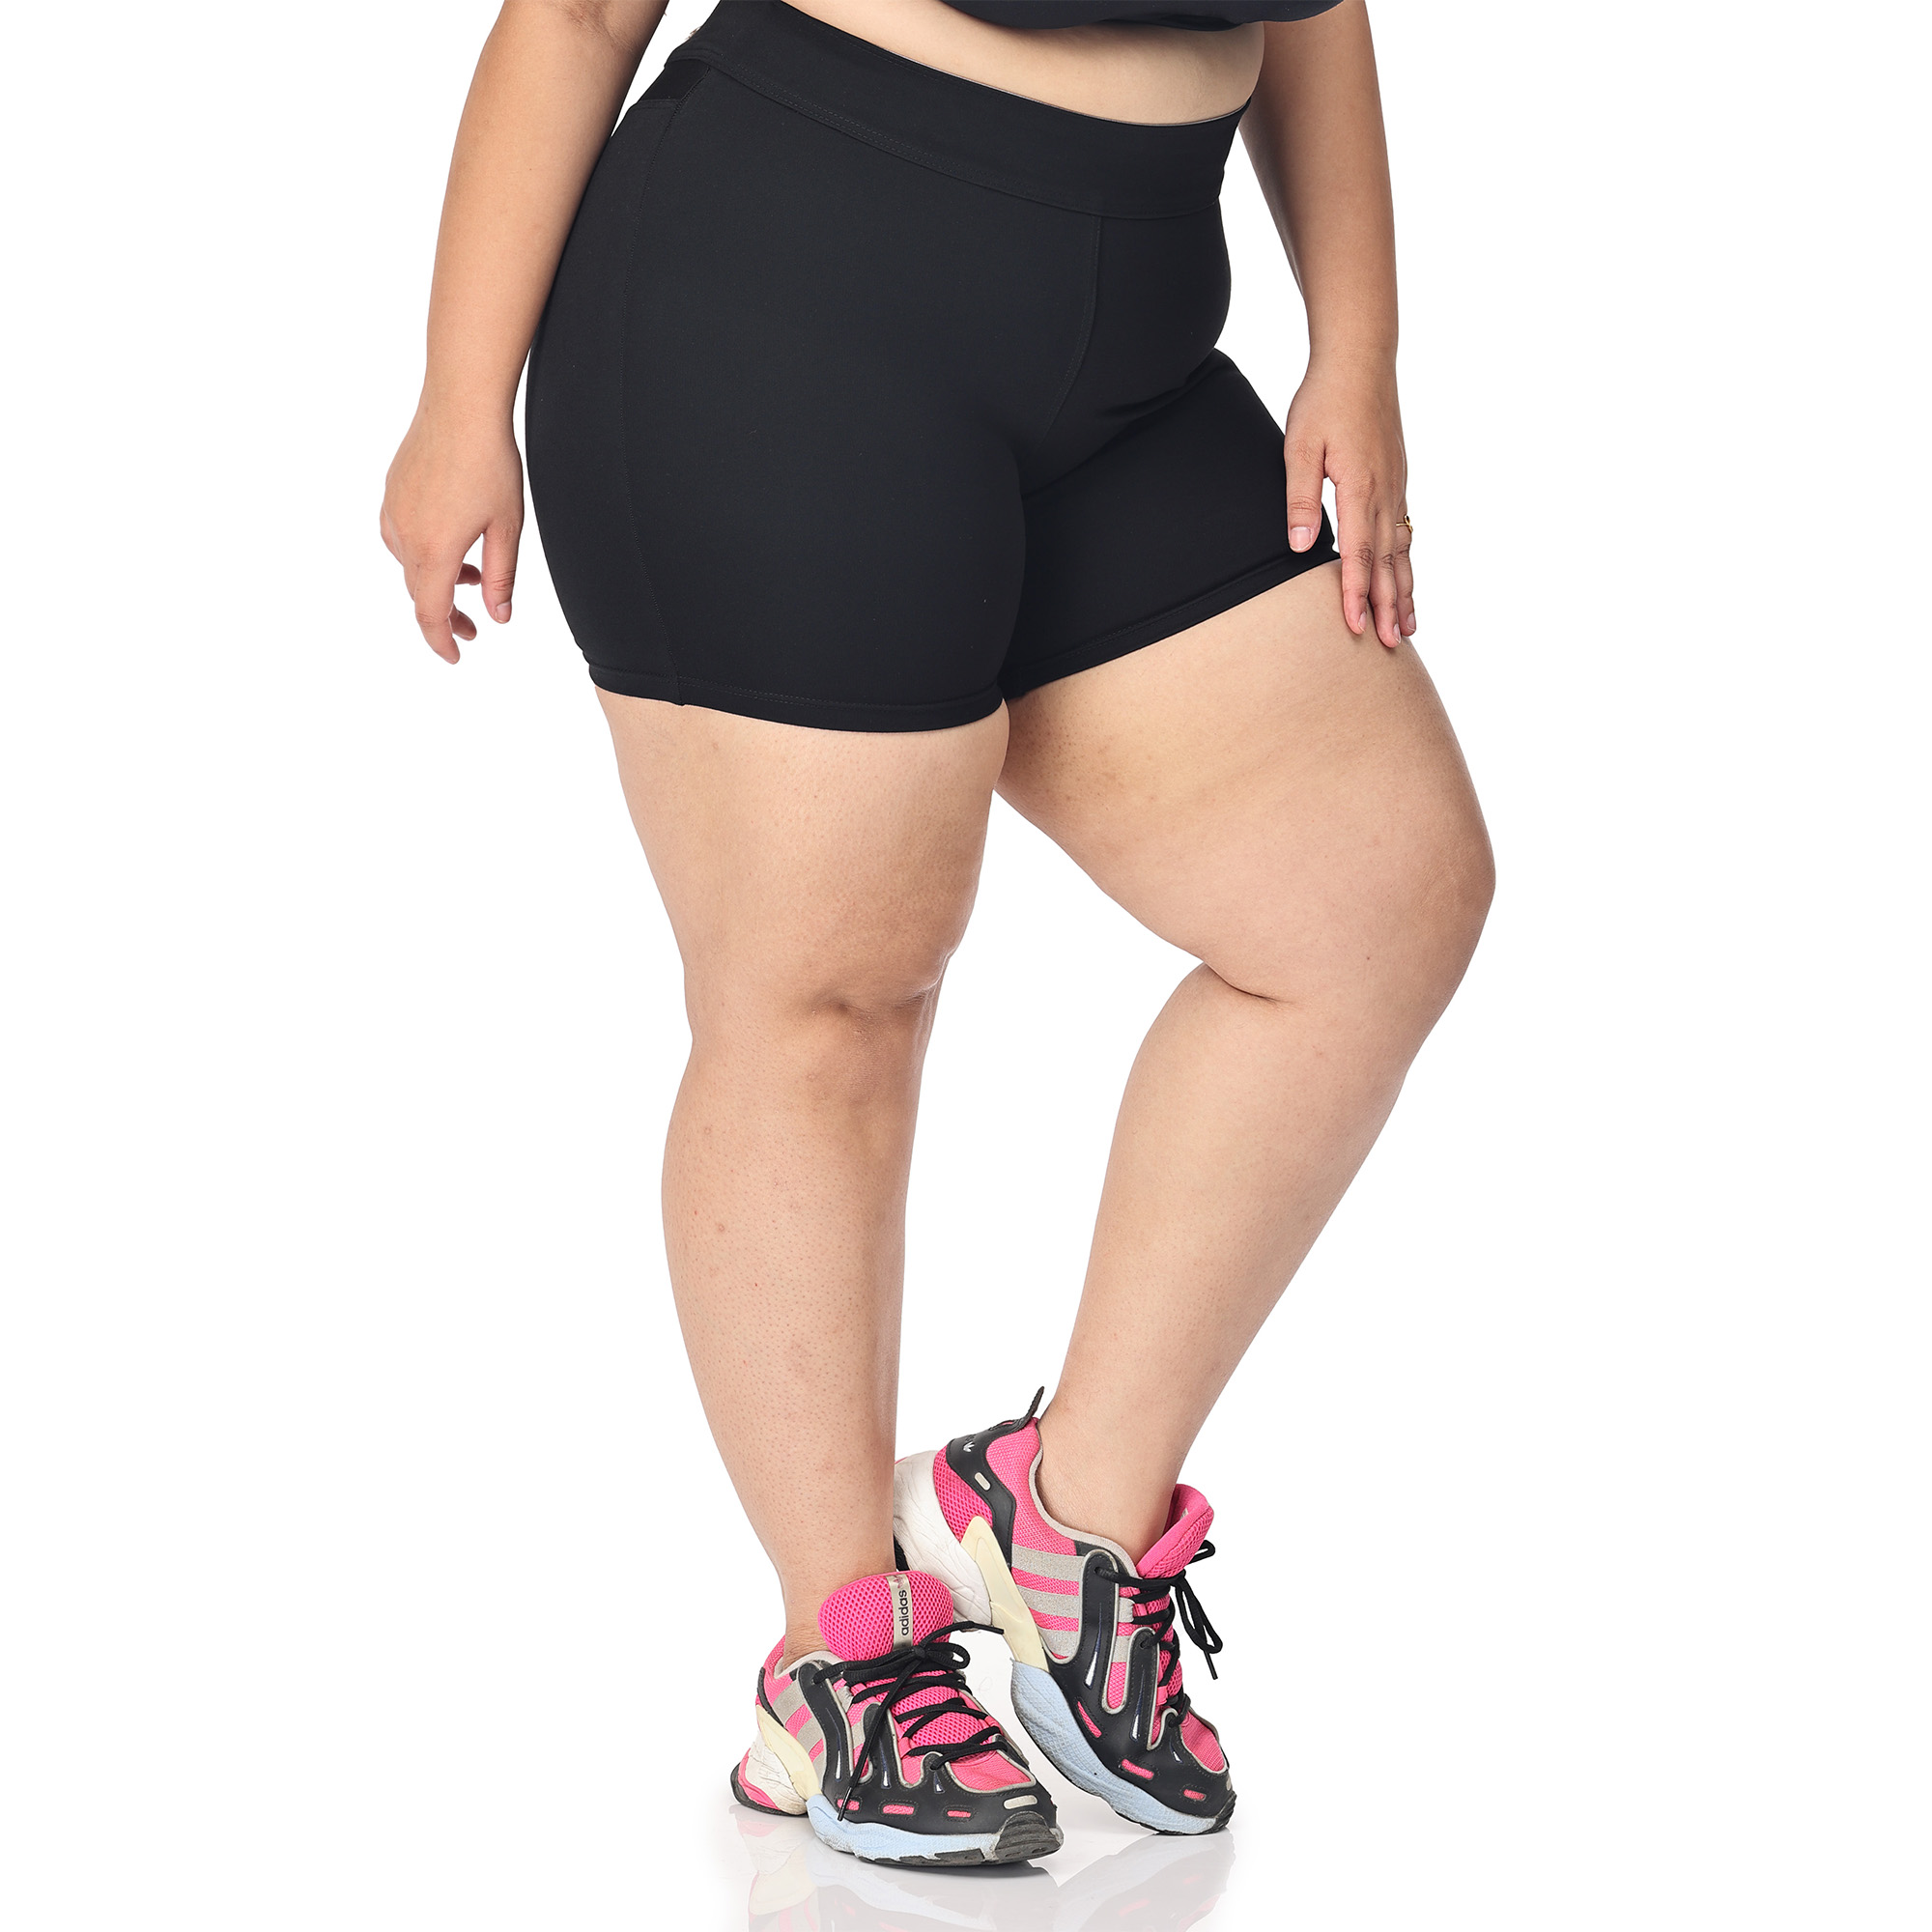 Black shorts women – Plus size active shape wear - 2 back pockets